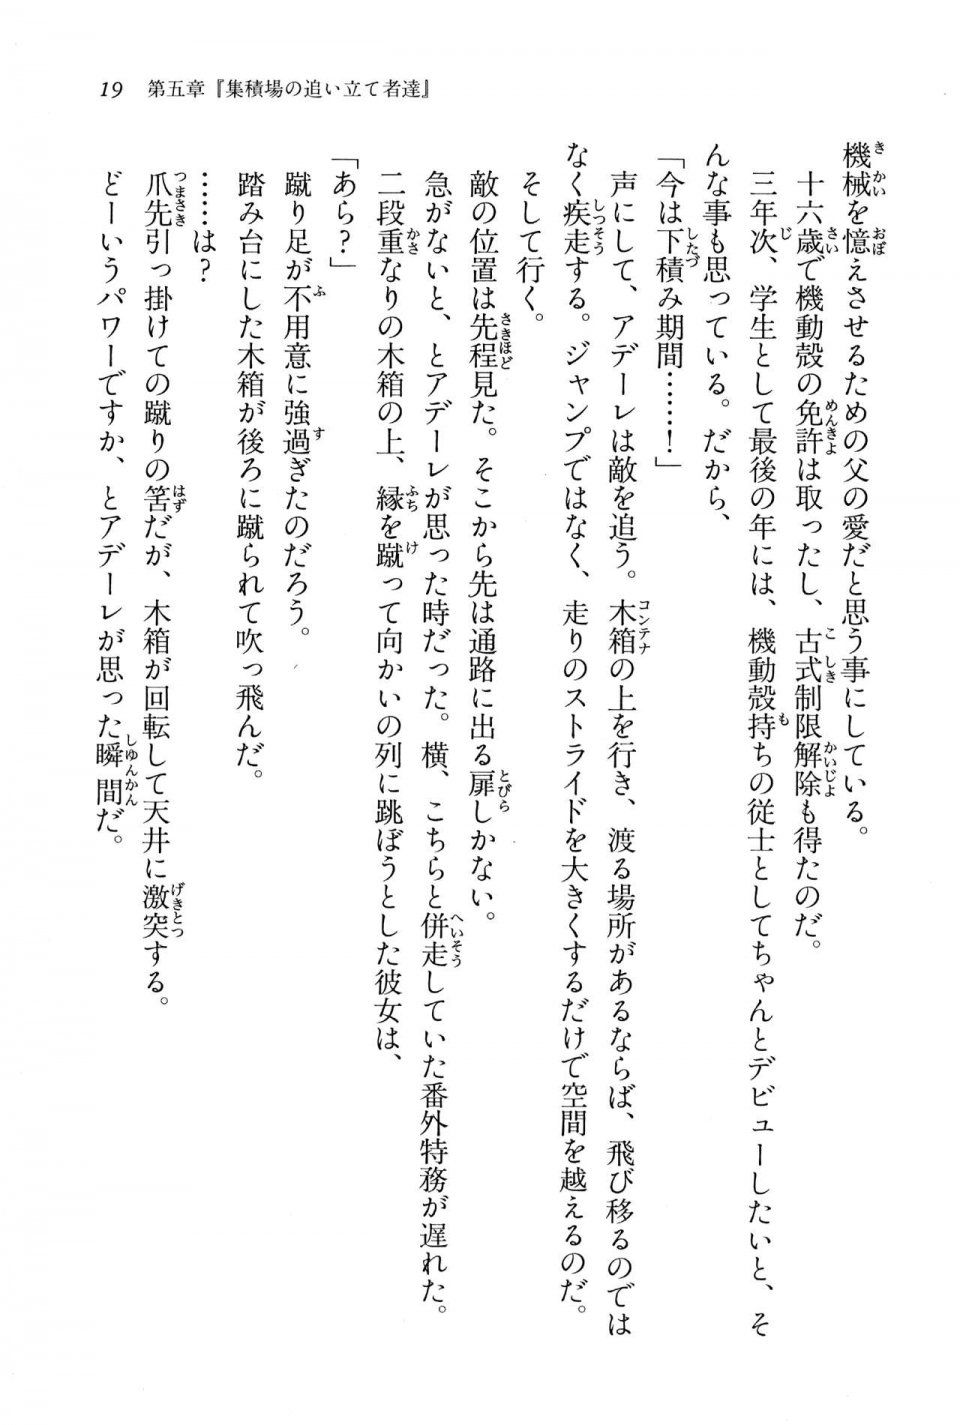 Kyoukai Senjou no Horizon BD Special Mininovel Vol 6(3B) - Photo #23